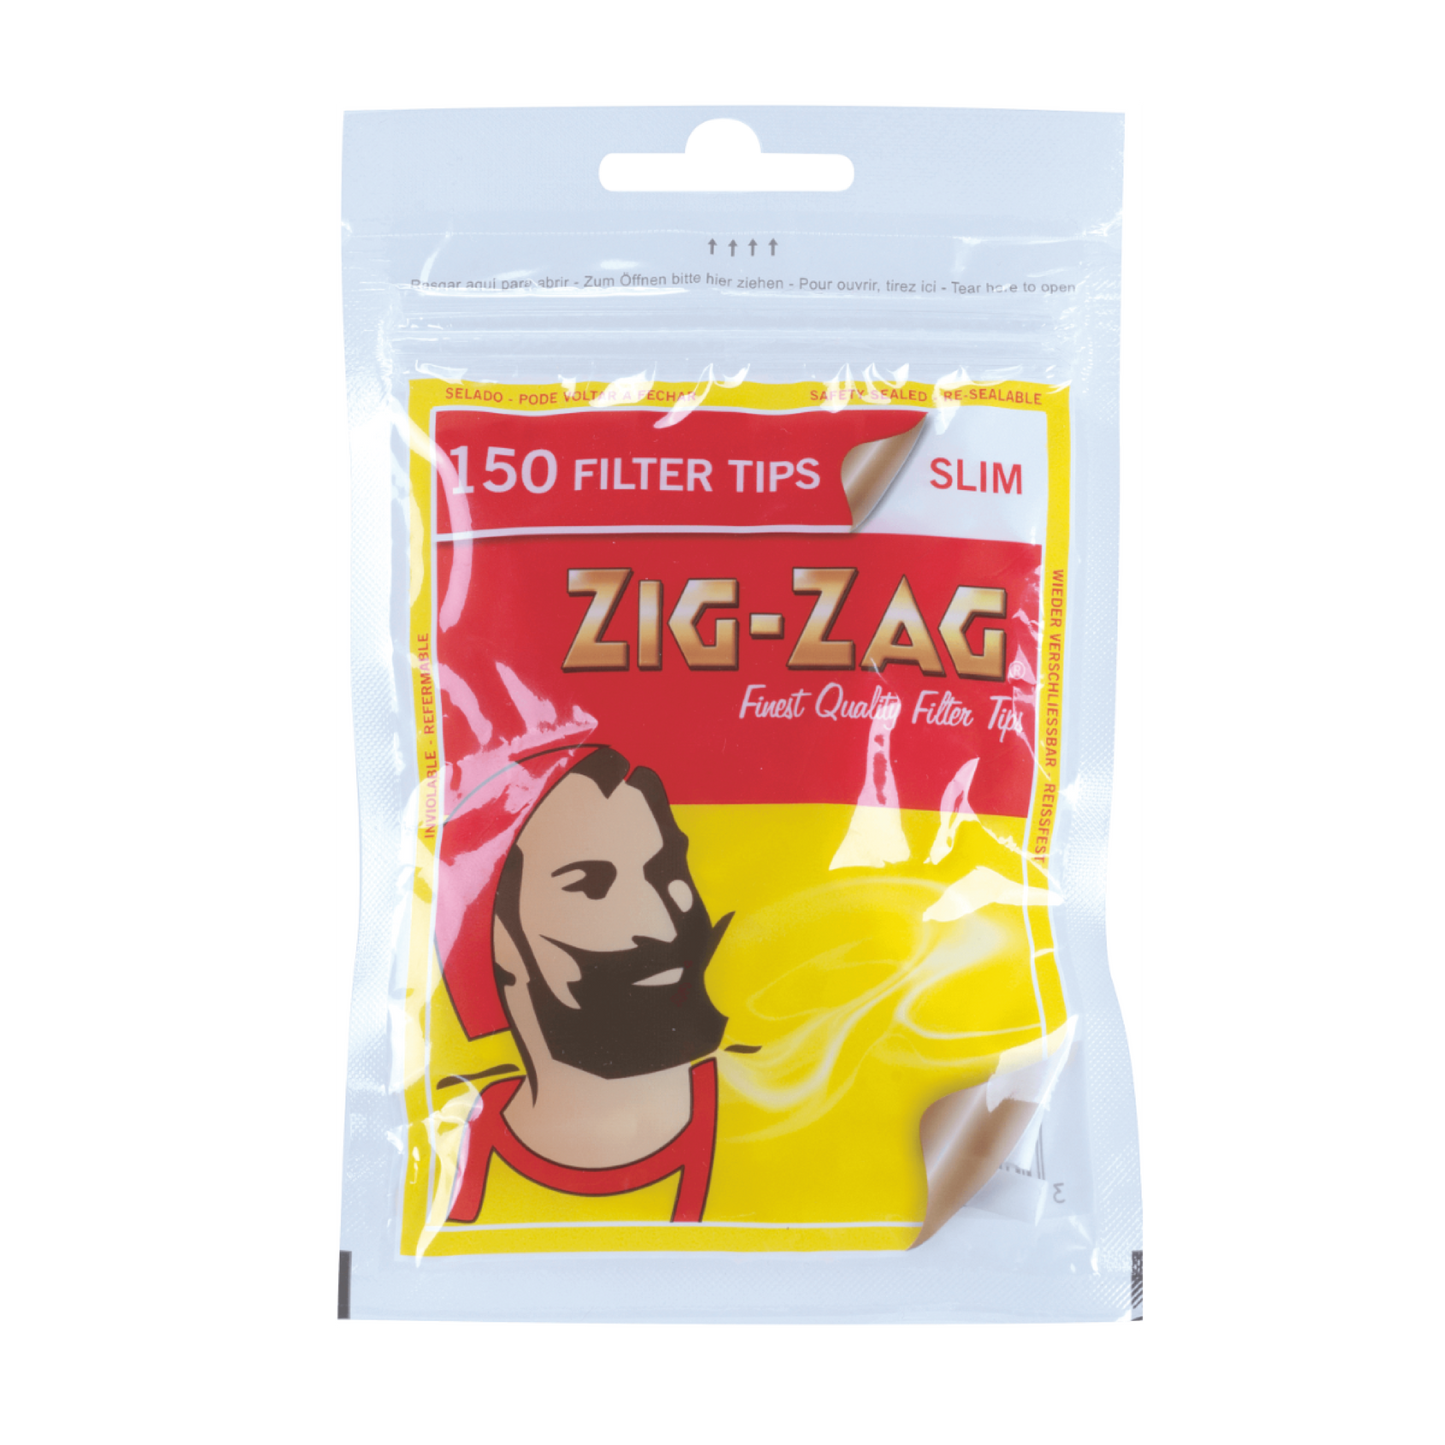 Zigaretten Filter Zig Zag Slim 150 Stück